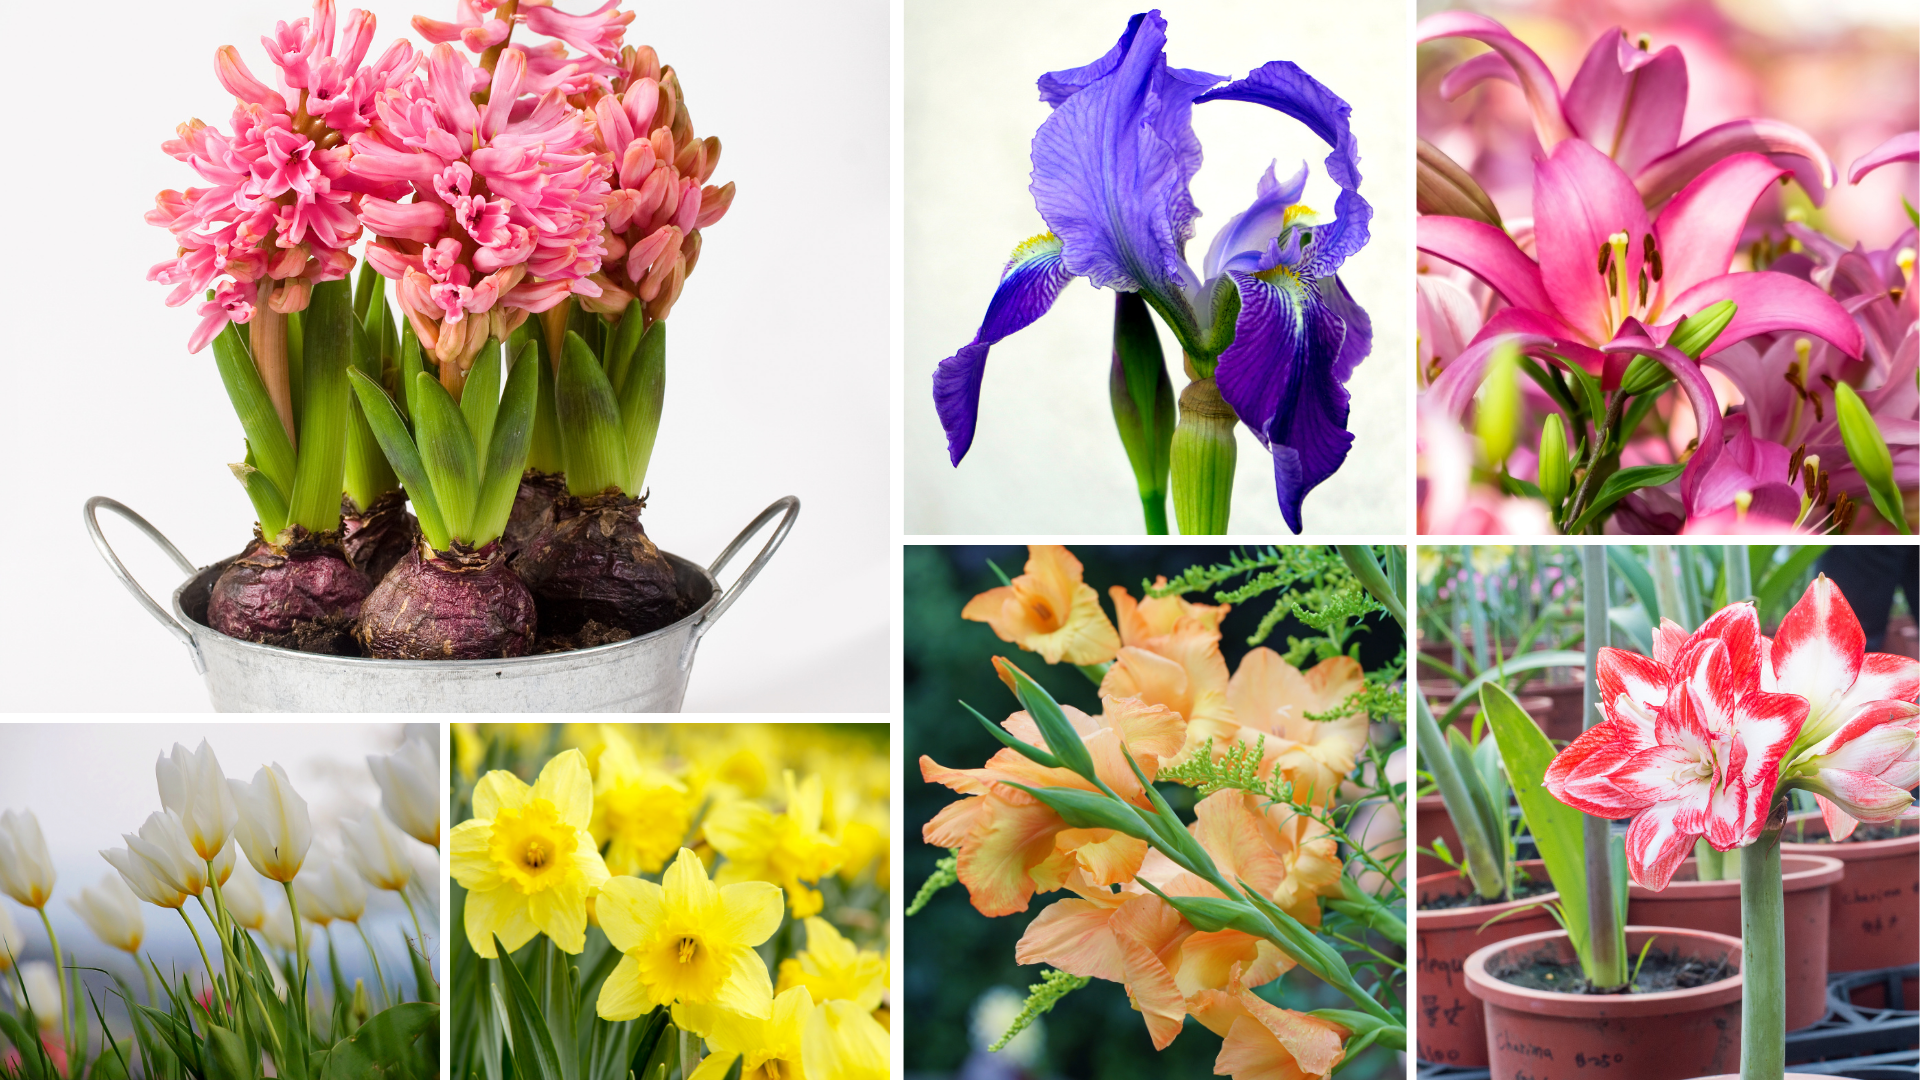 Flowers Toxic to Pets 1 – Bulbs